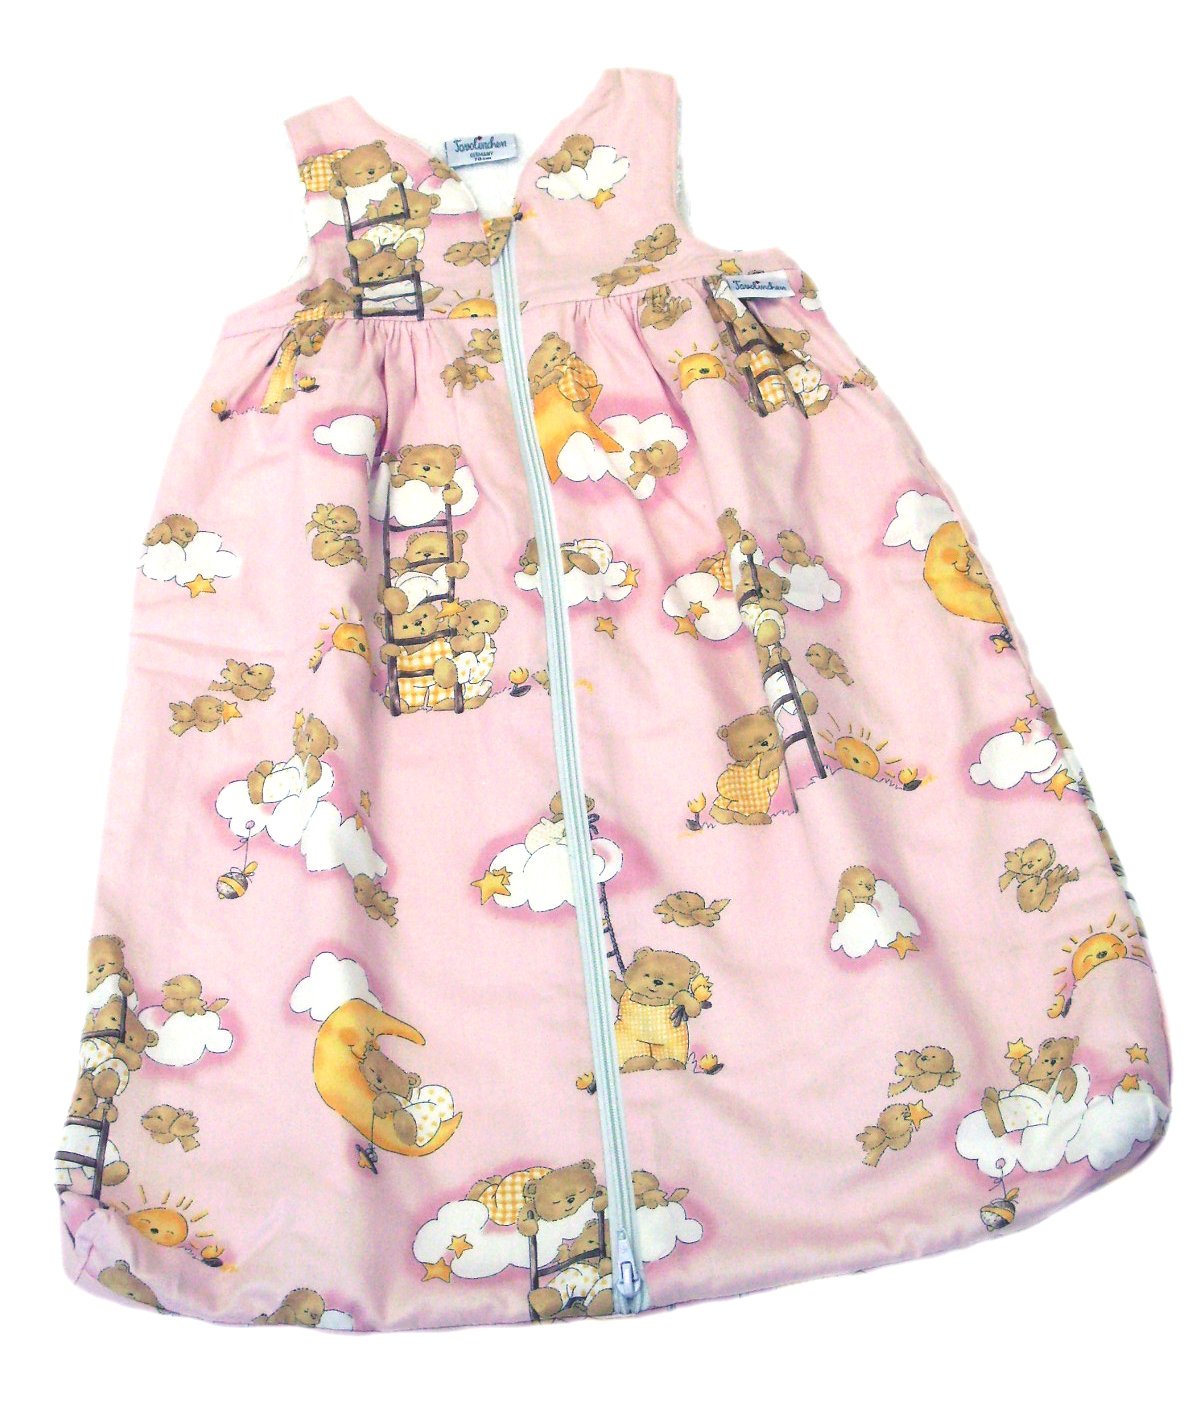 Tavo Tavolinchen 3519879035 Terry Cloth Sleeping Bag Bear on Ladder, Size 90, Pink